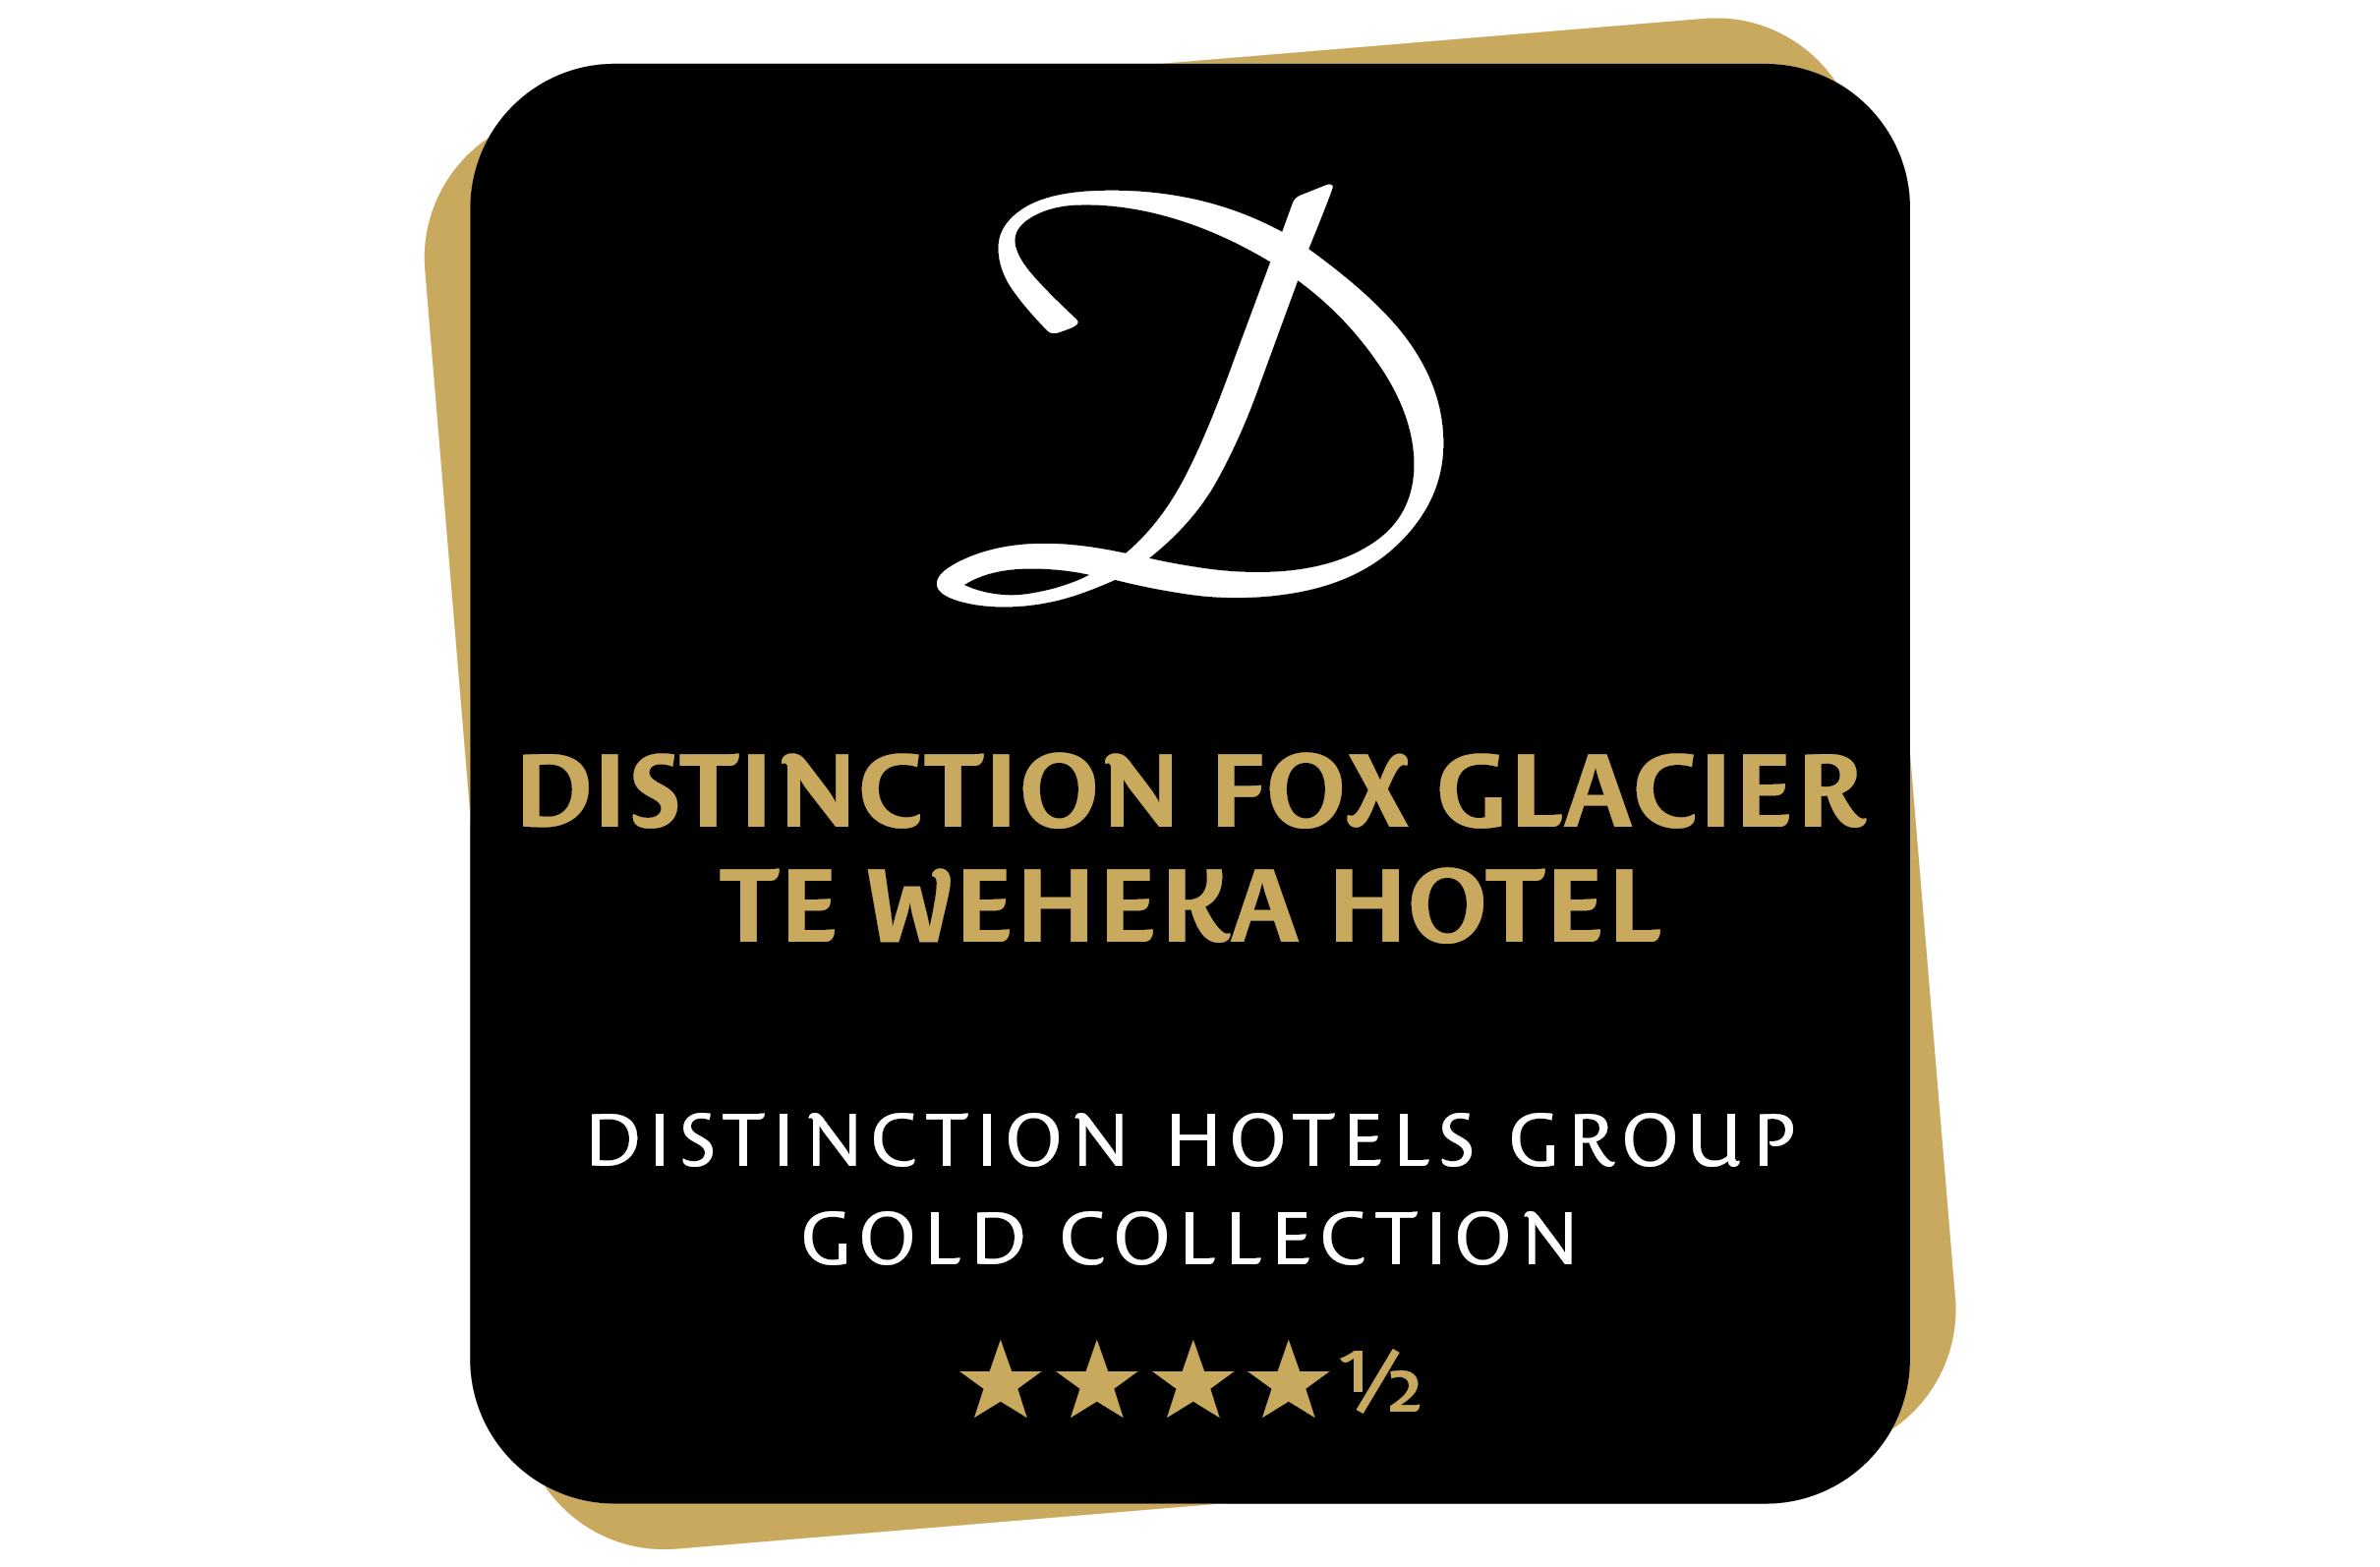 
Distinction Fox Glacier Te Weheka Hotel